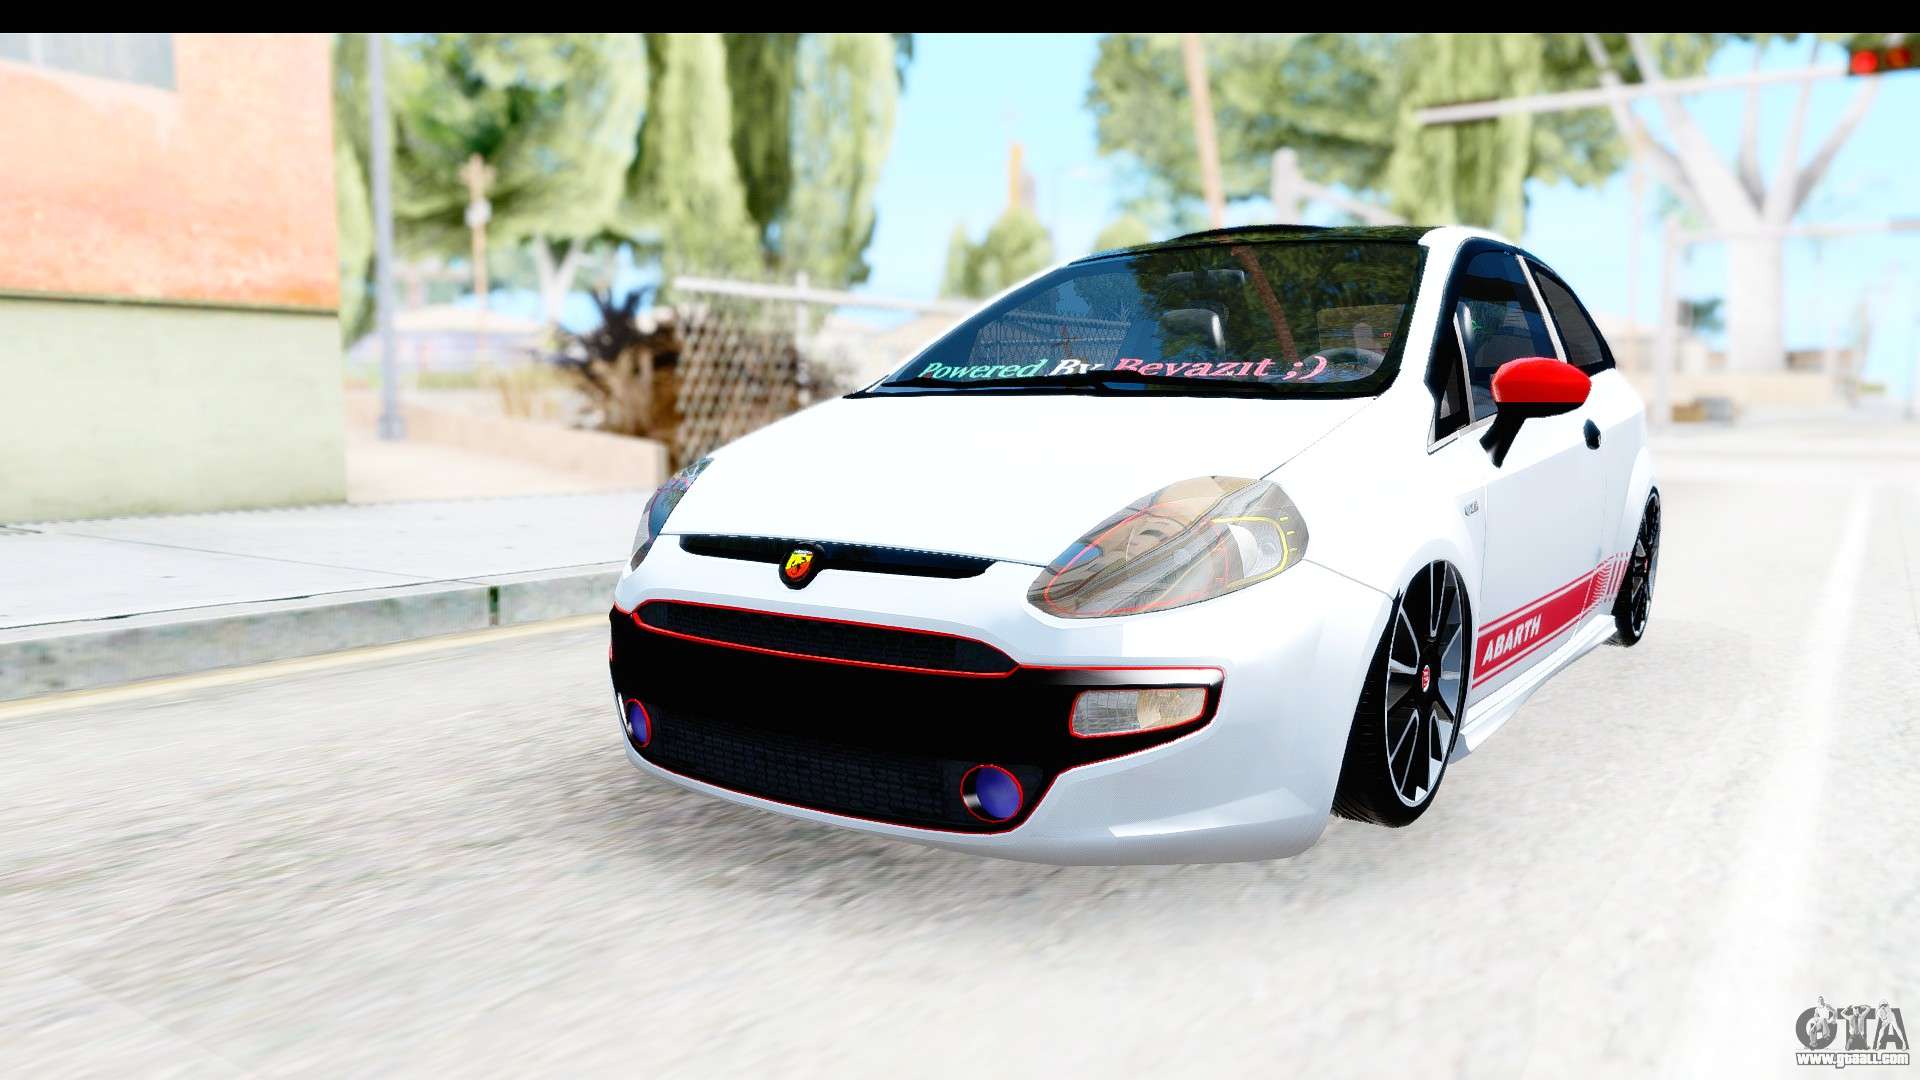 Fiat Grande Punto Tuning for GTA San Andreas